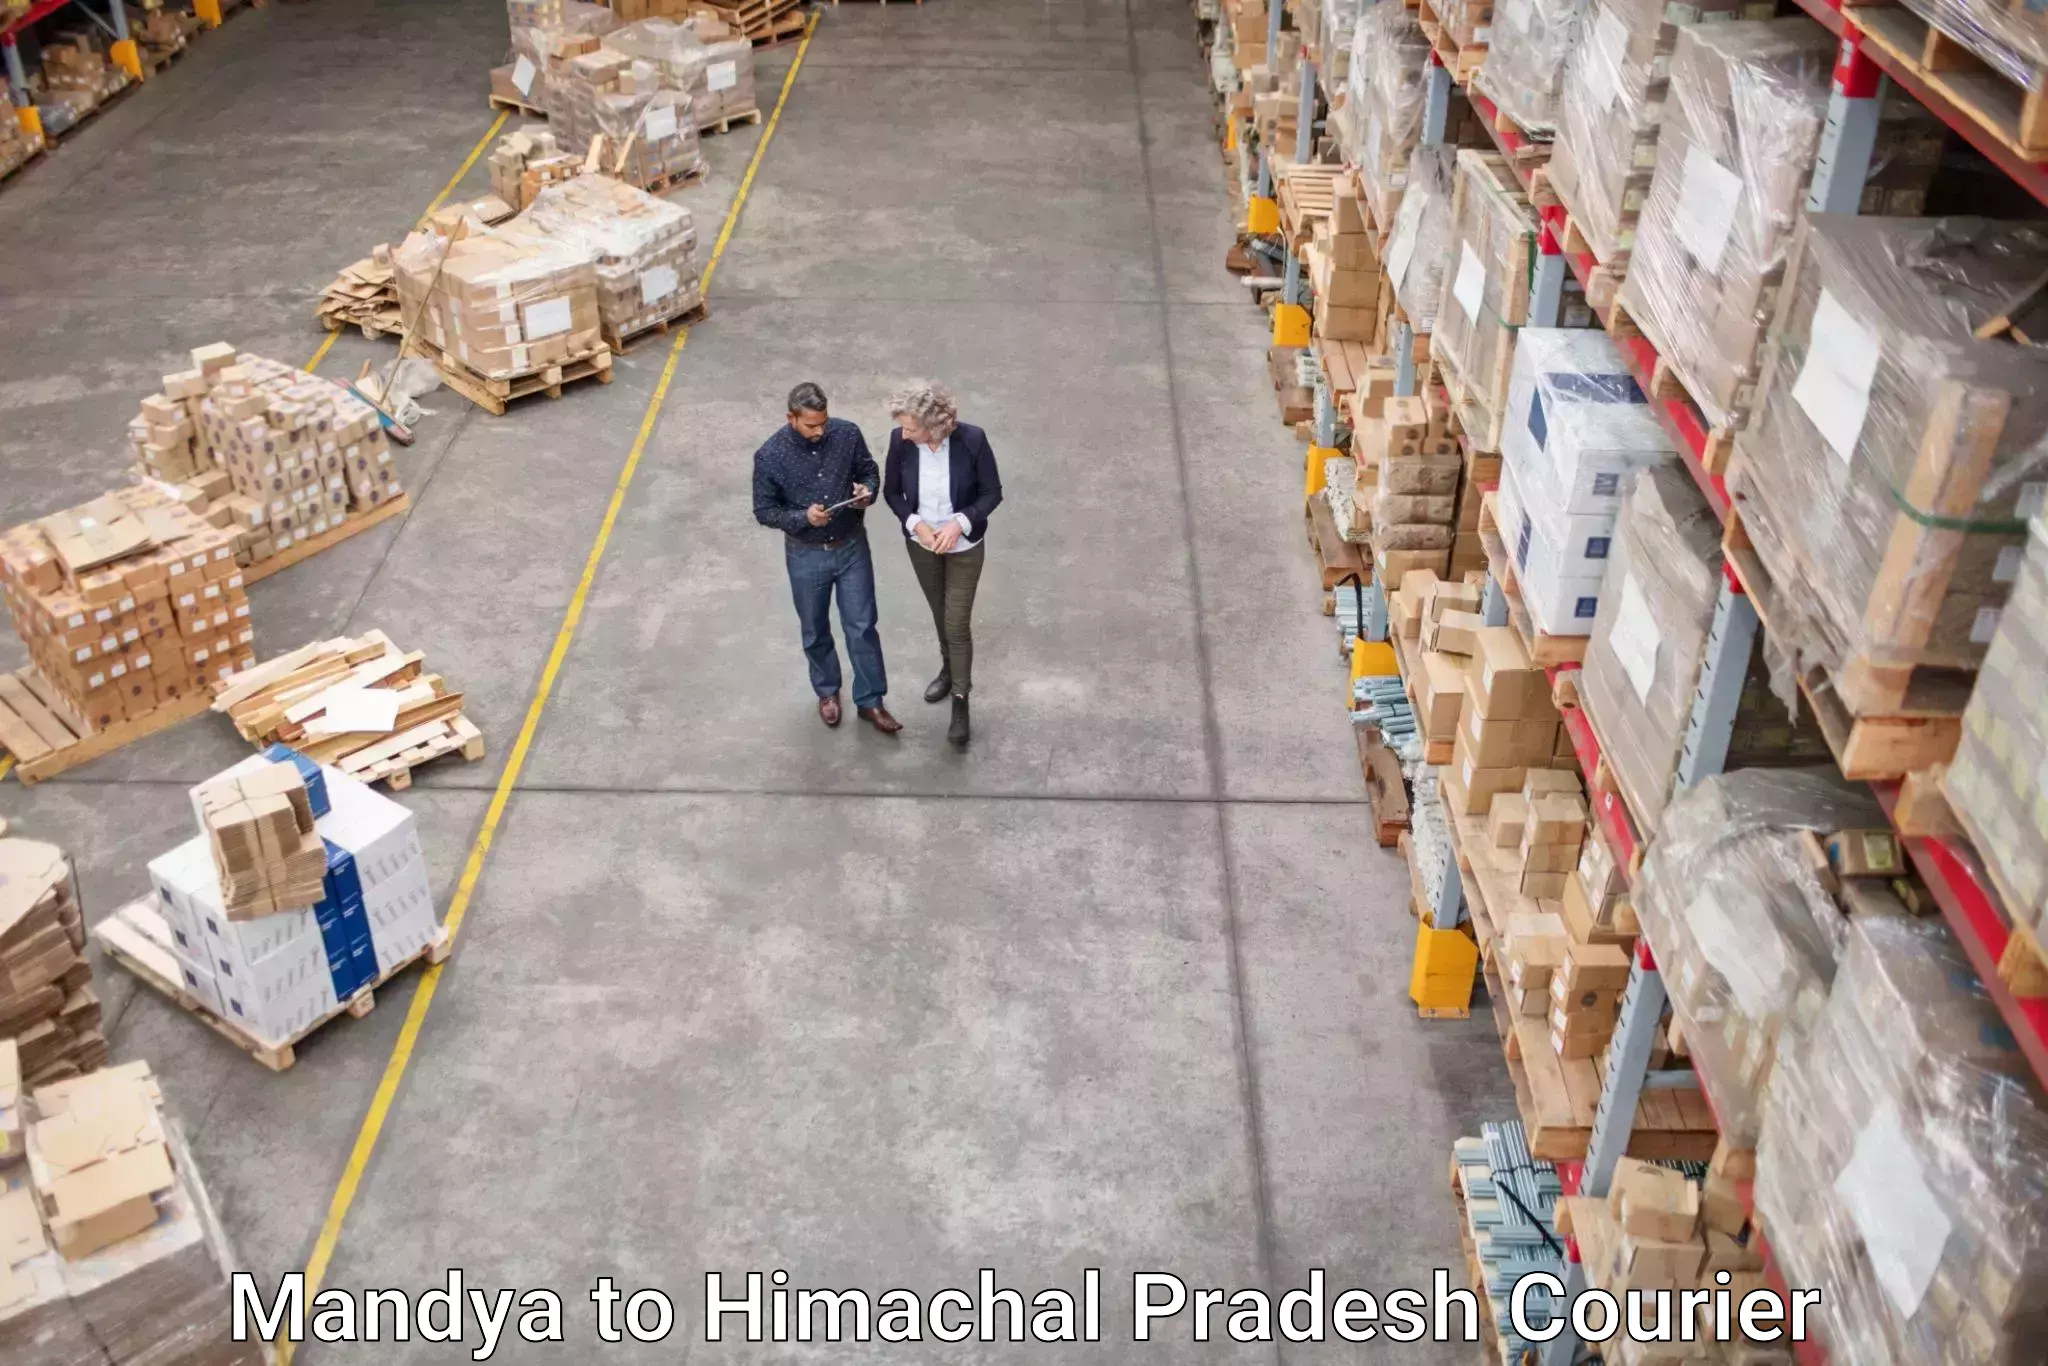 Digital courier platforms Mandya to Himachal Pradesh